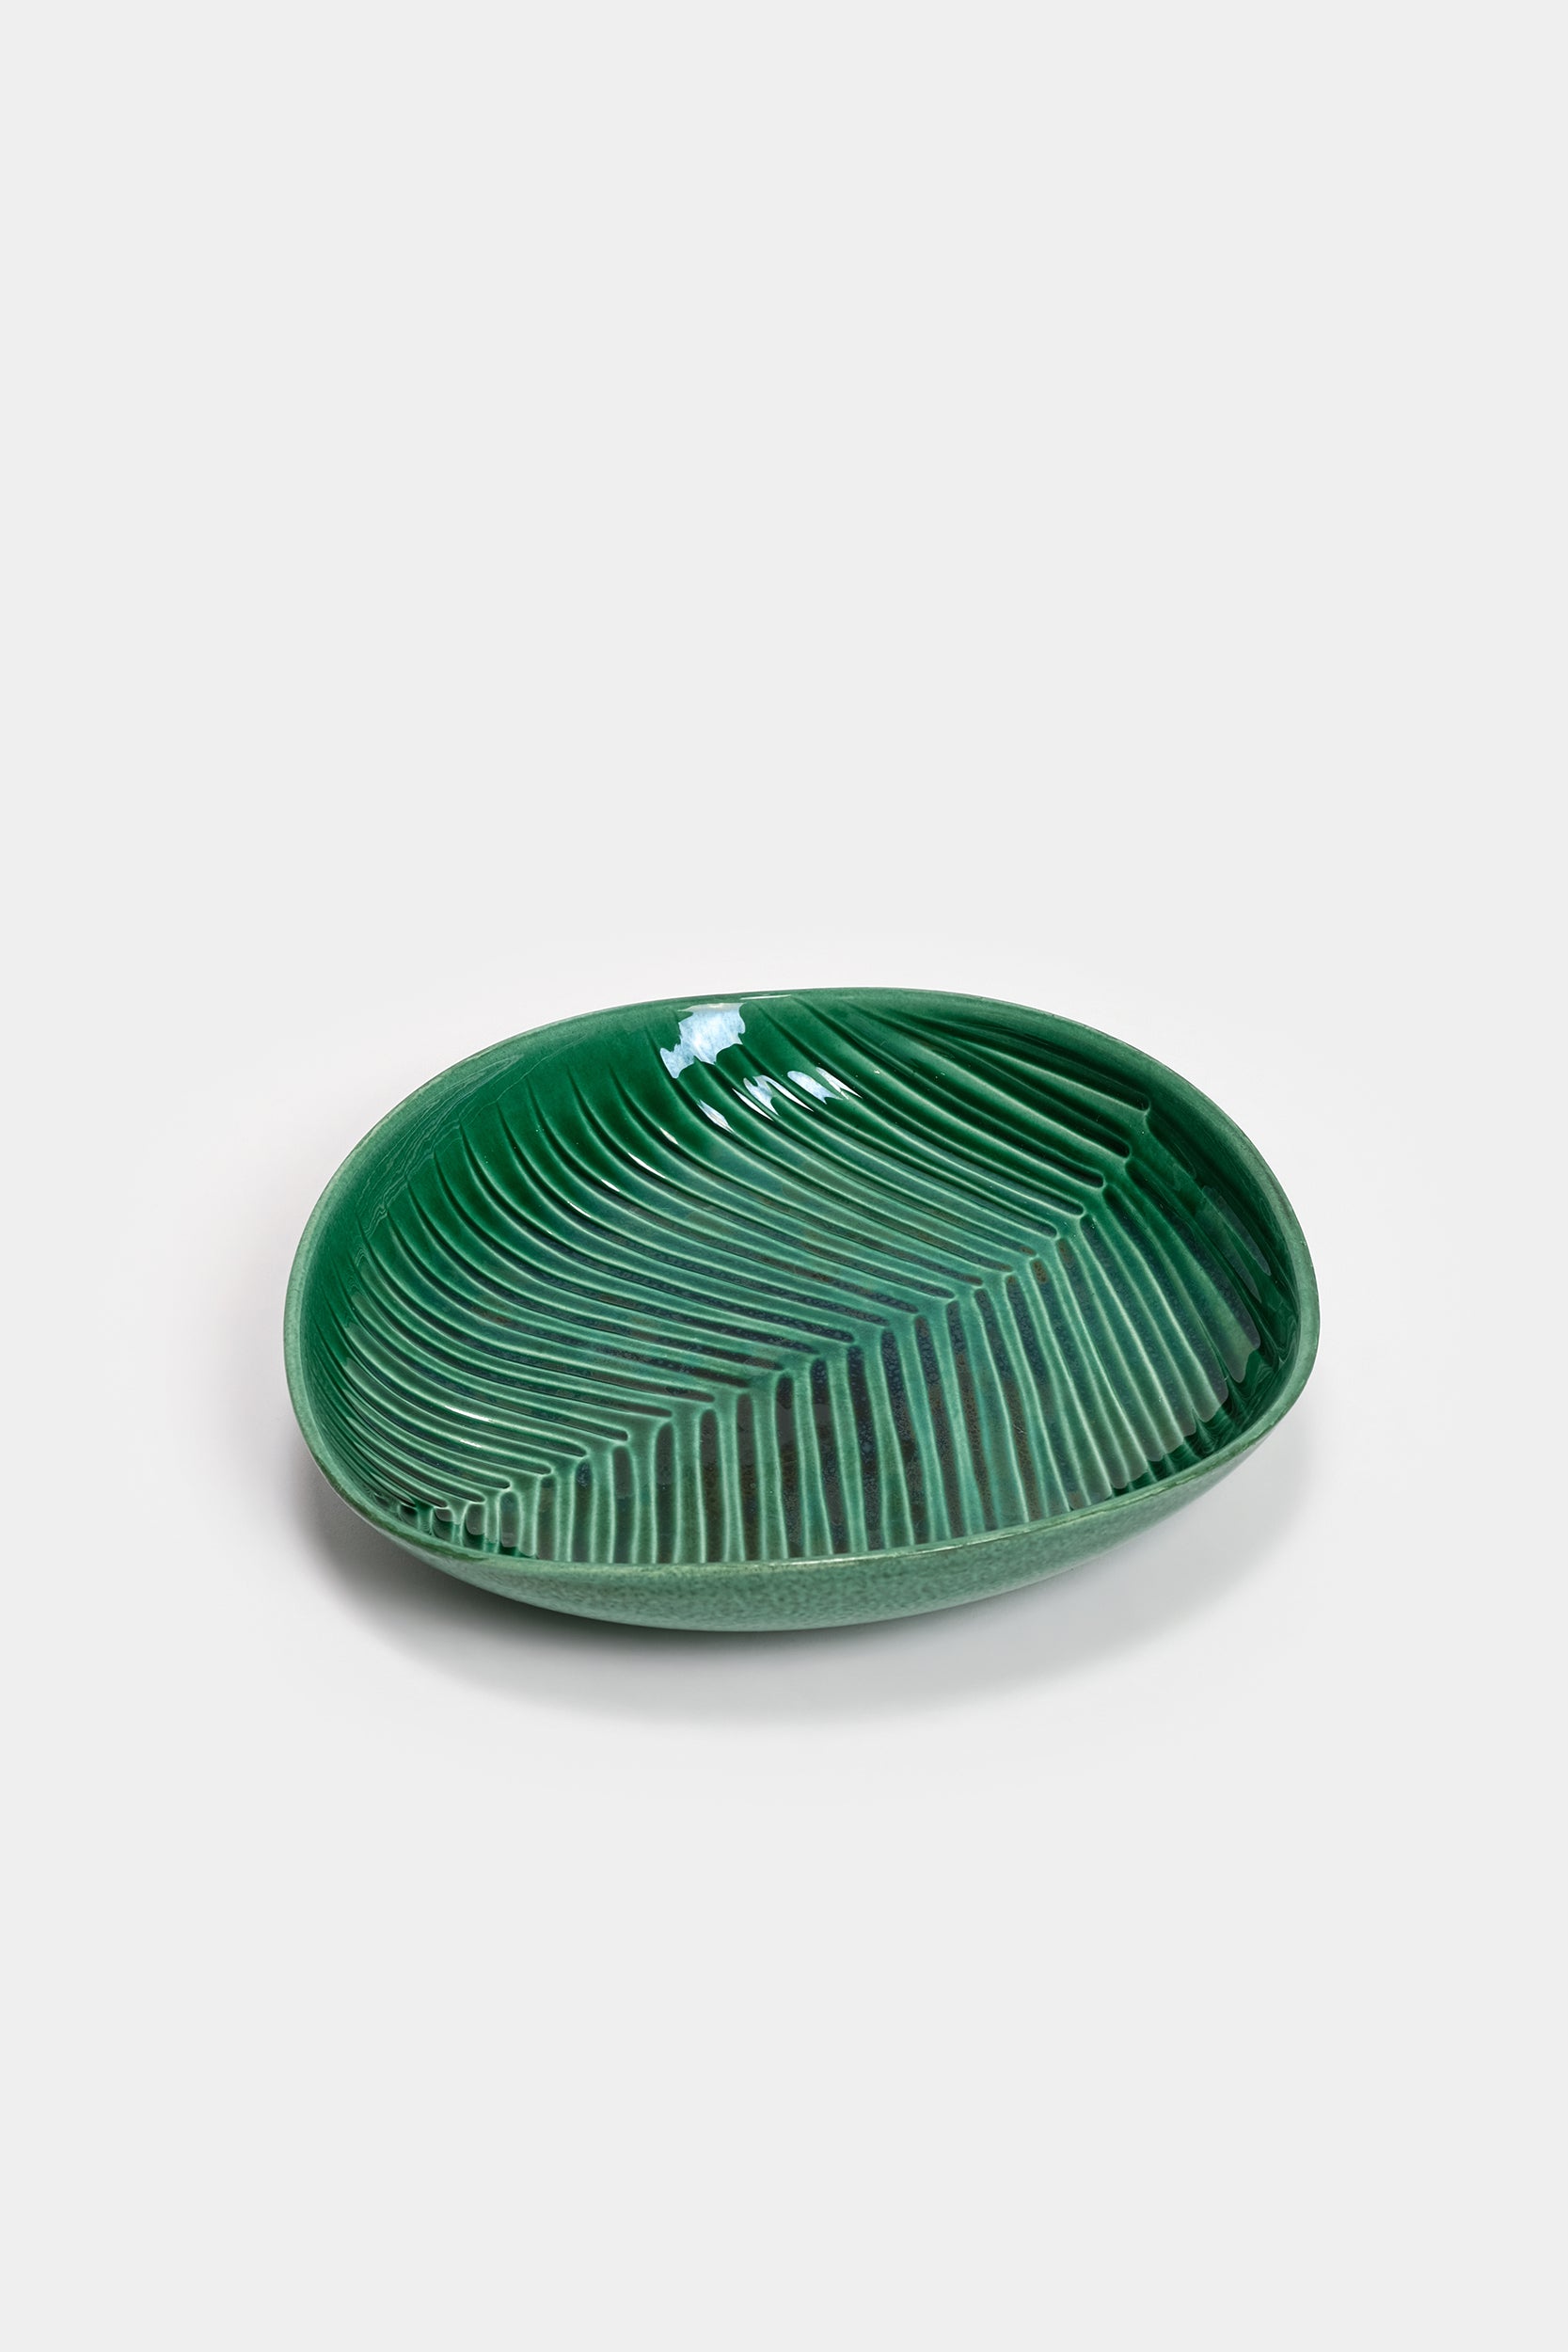 Landert, shallow ceramic bowl, 60s